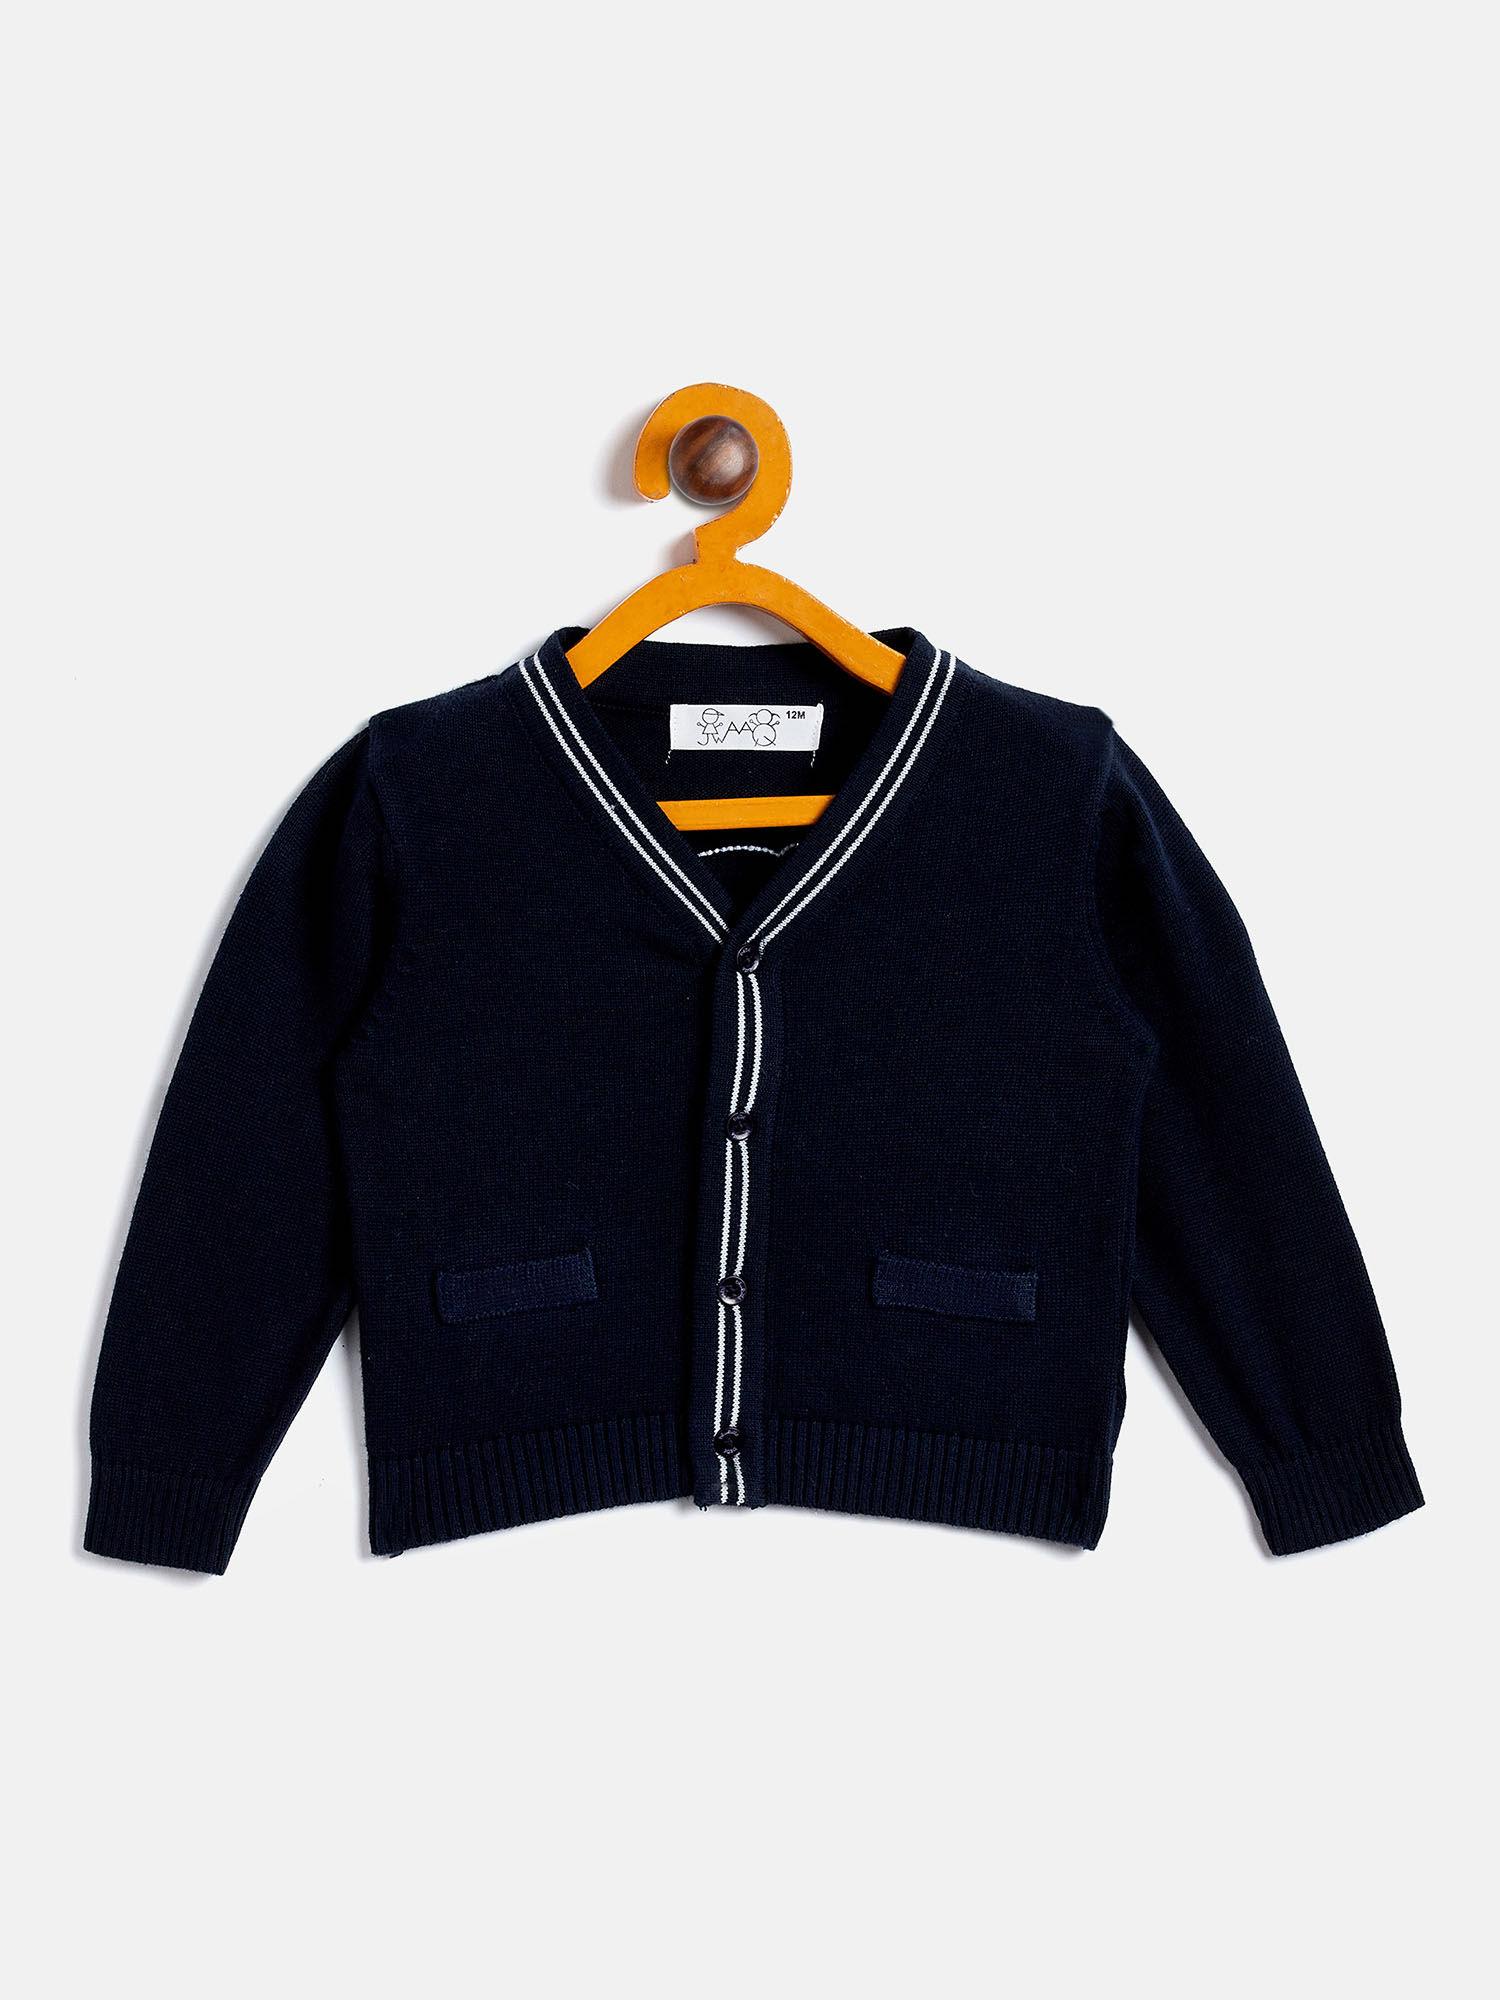 Boys Winter Sweater- Navy Blue